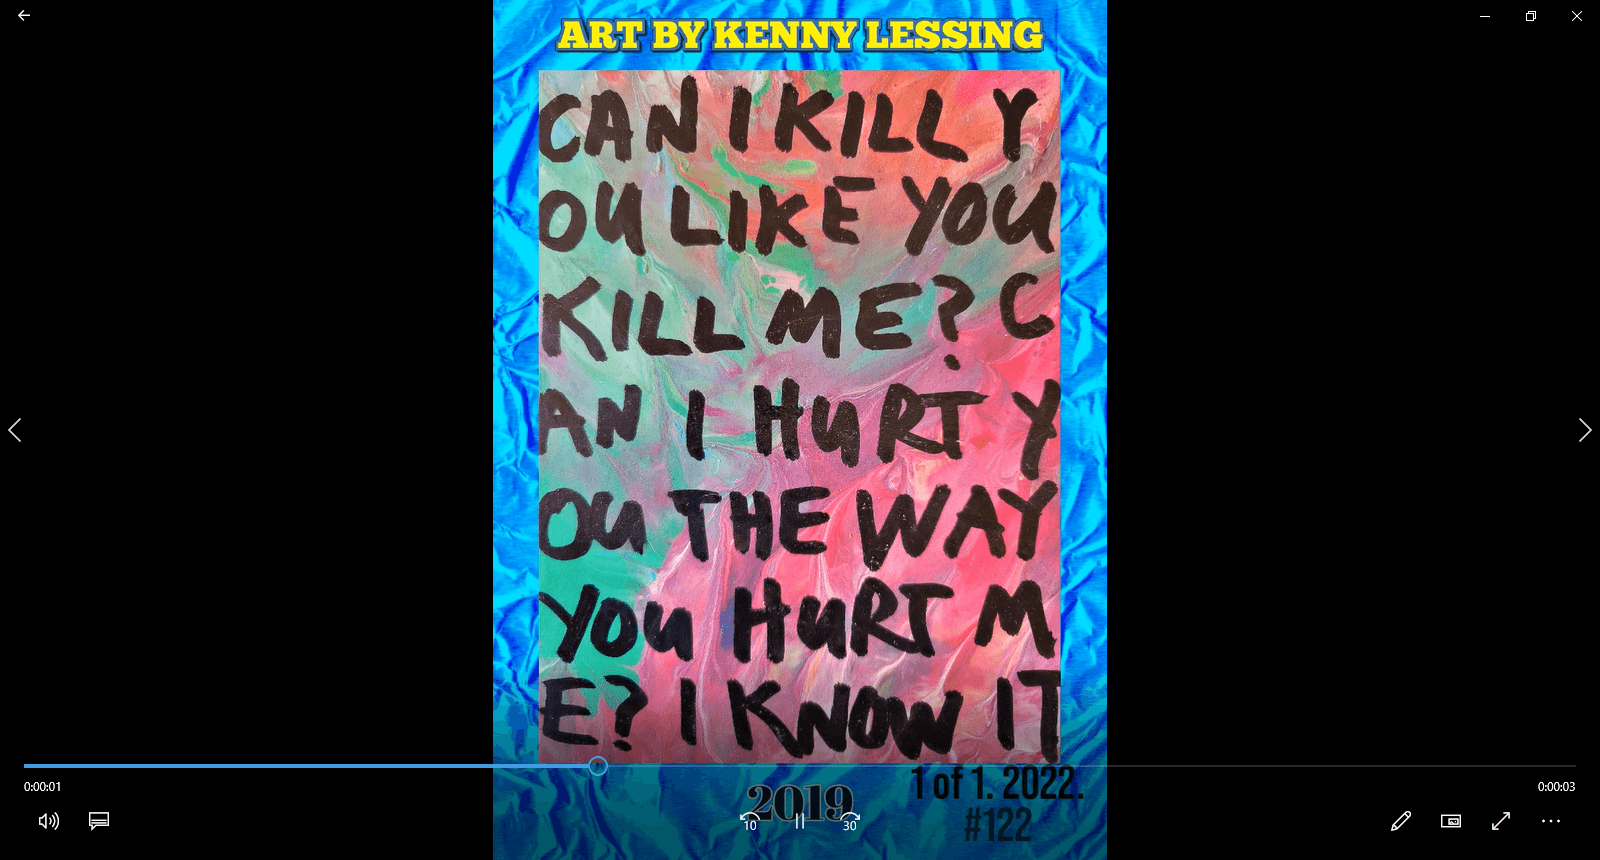 2019 - 2022 #ArtByKennyLessing 1 of 1 card #122